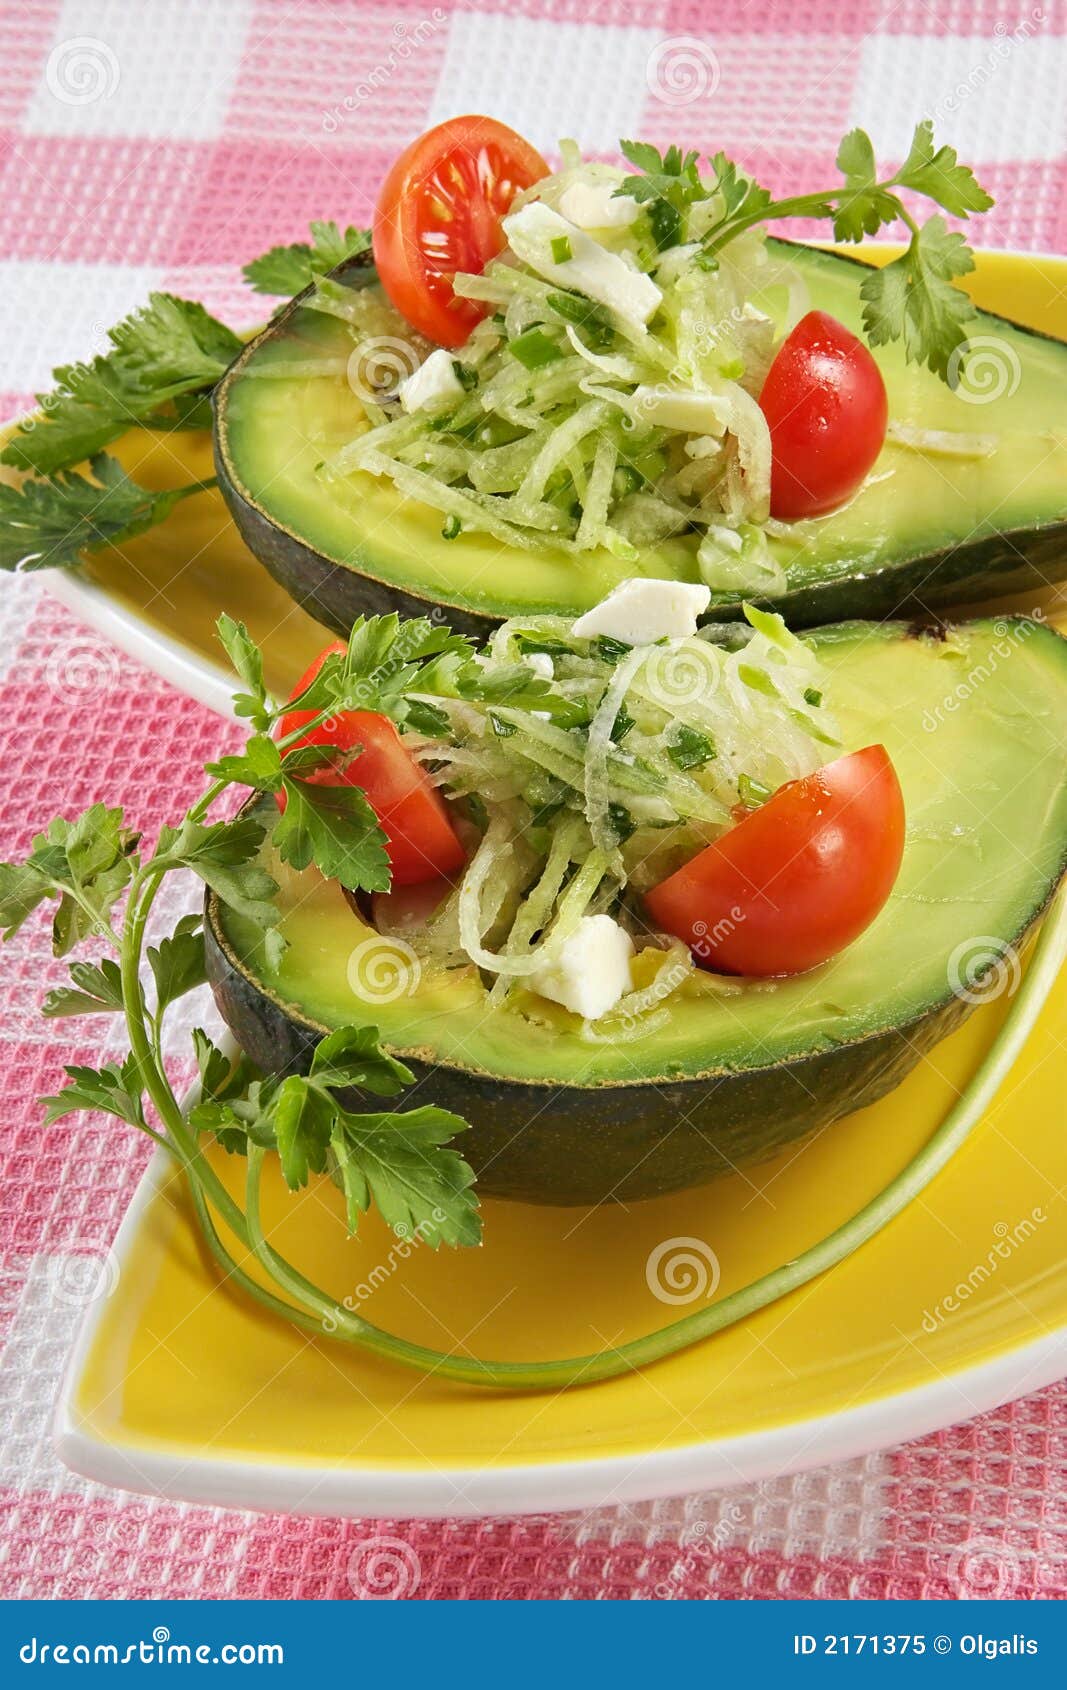 avocado vegetable stuffing